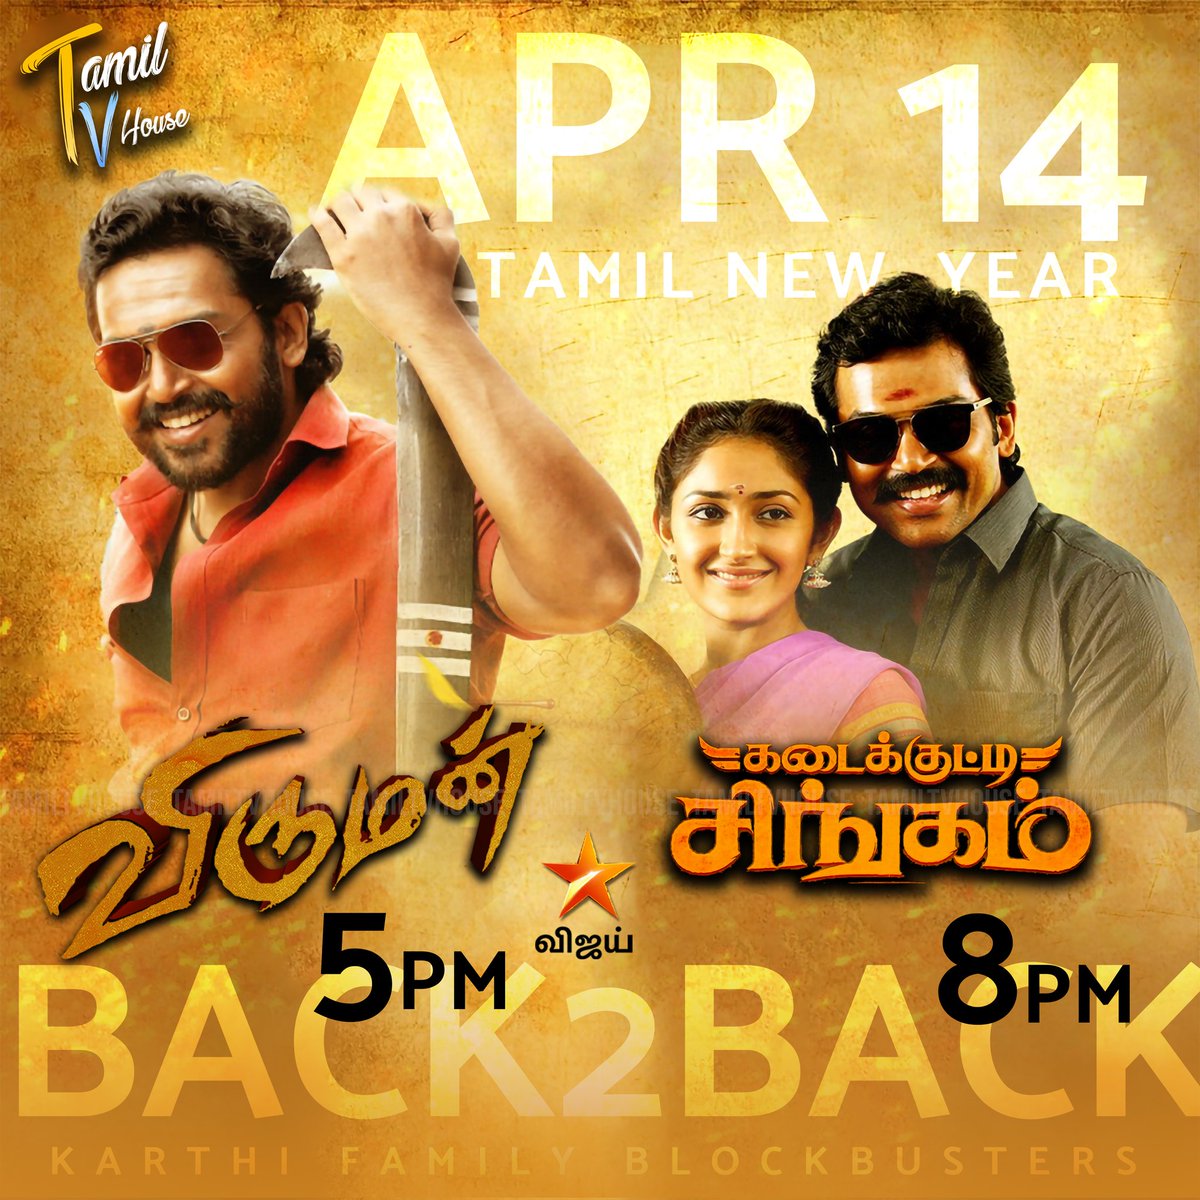 Watch Back to Back #Karthi Family Blockbuster Movies !
Tamil New Year Special On #VijayTV

#Viruman | Apr 14 @ 5pm
#KadaikuttySingam | Apr 14 @ 8pm

#SAISANGO #TAMILTVHouse
#Karthi #AditiShankar #Sayyeshaa